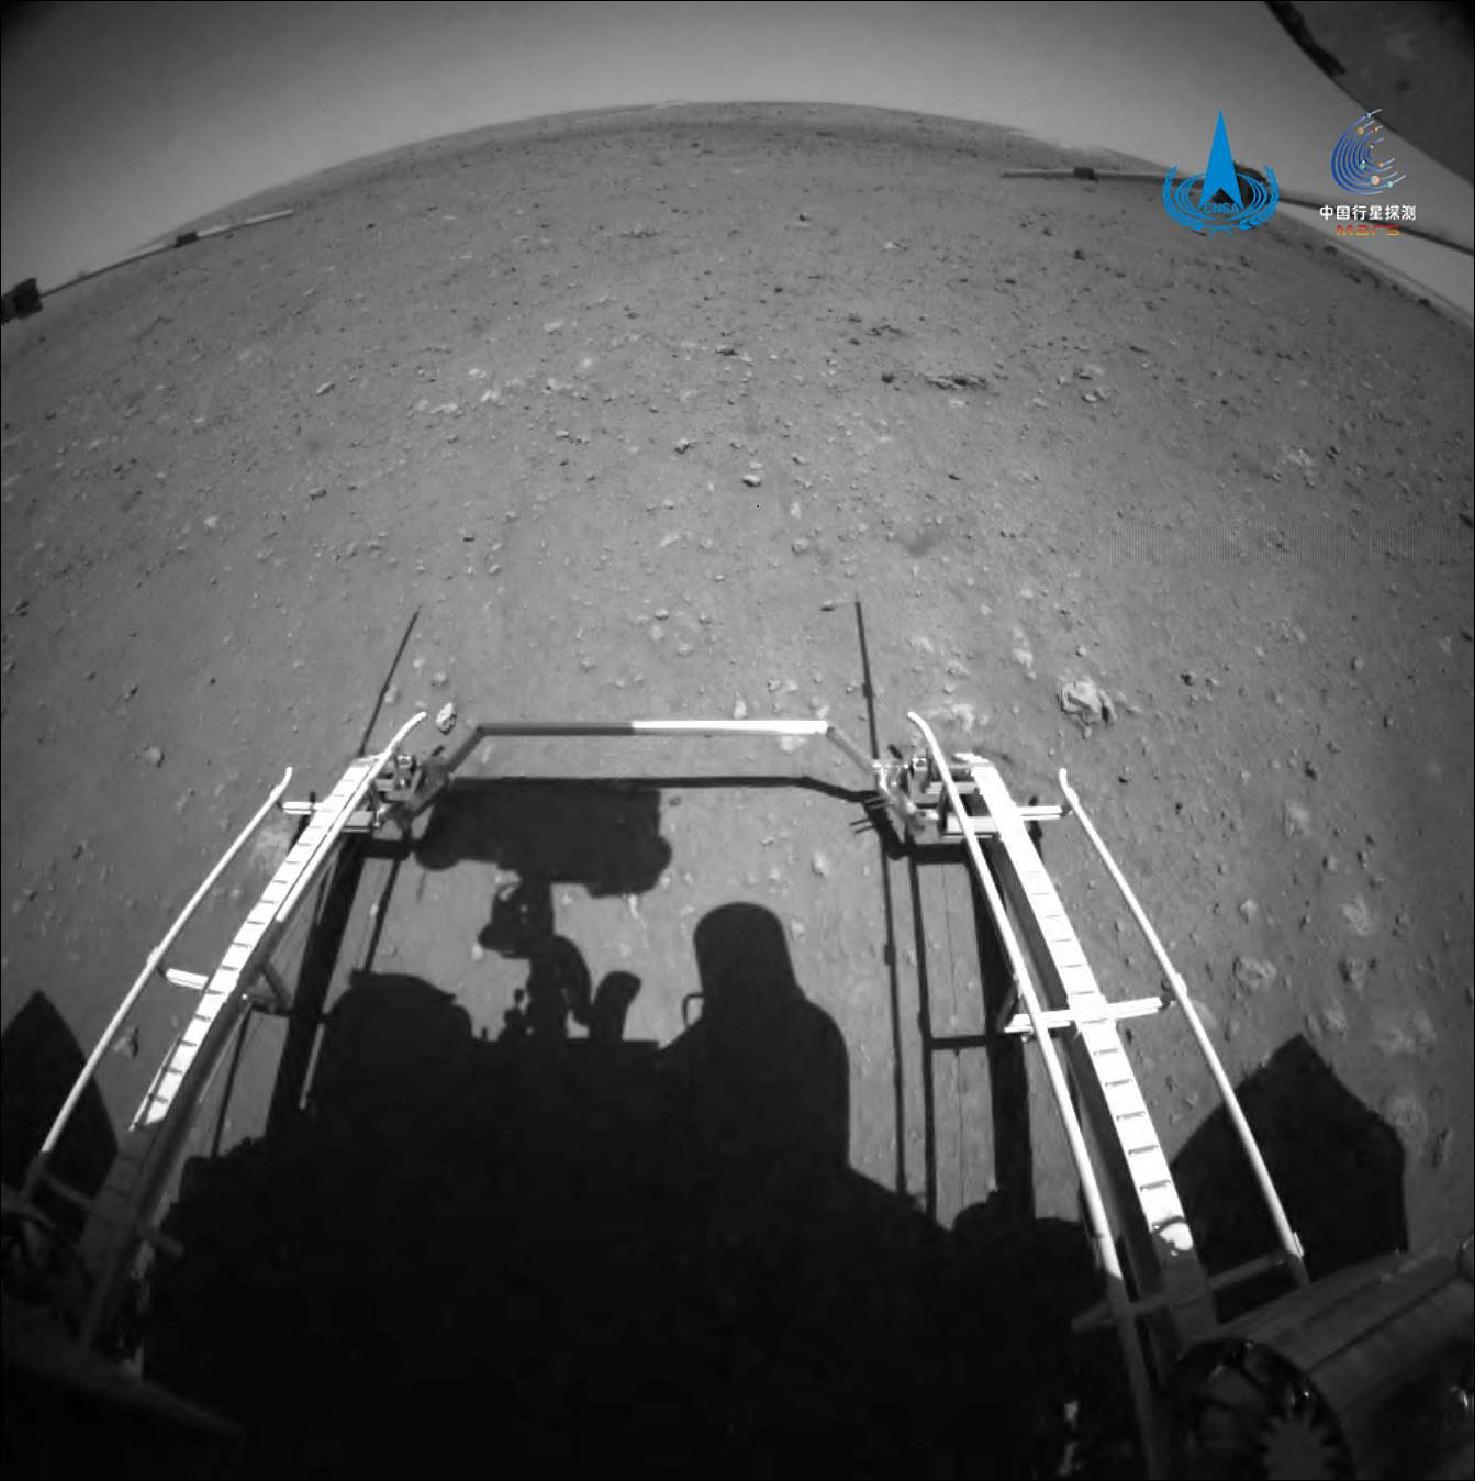 Figure 19: A forward hazard avoidance camera view during Zhurong rover deployment onto Mars (image credit: CNSA/PEC)